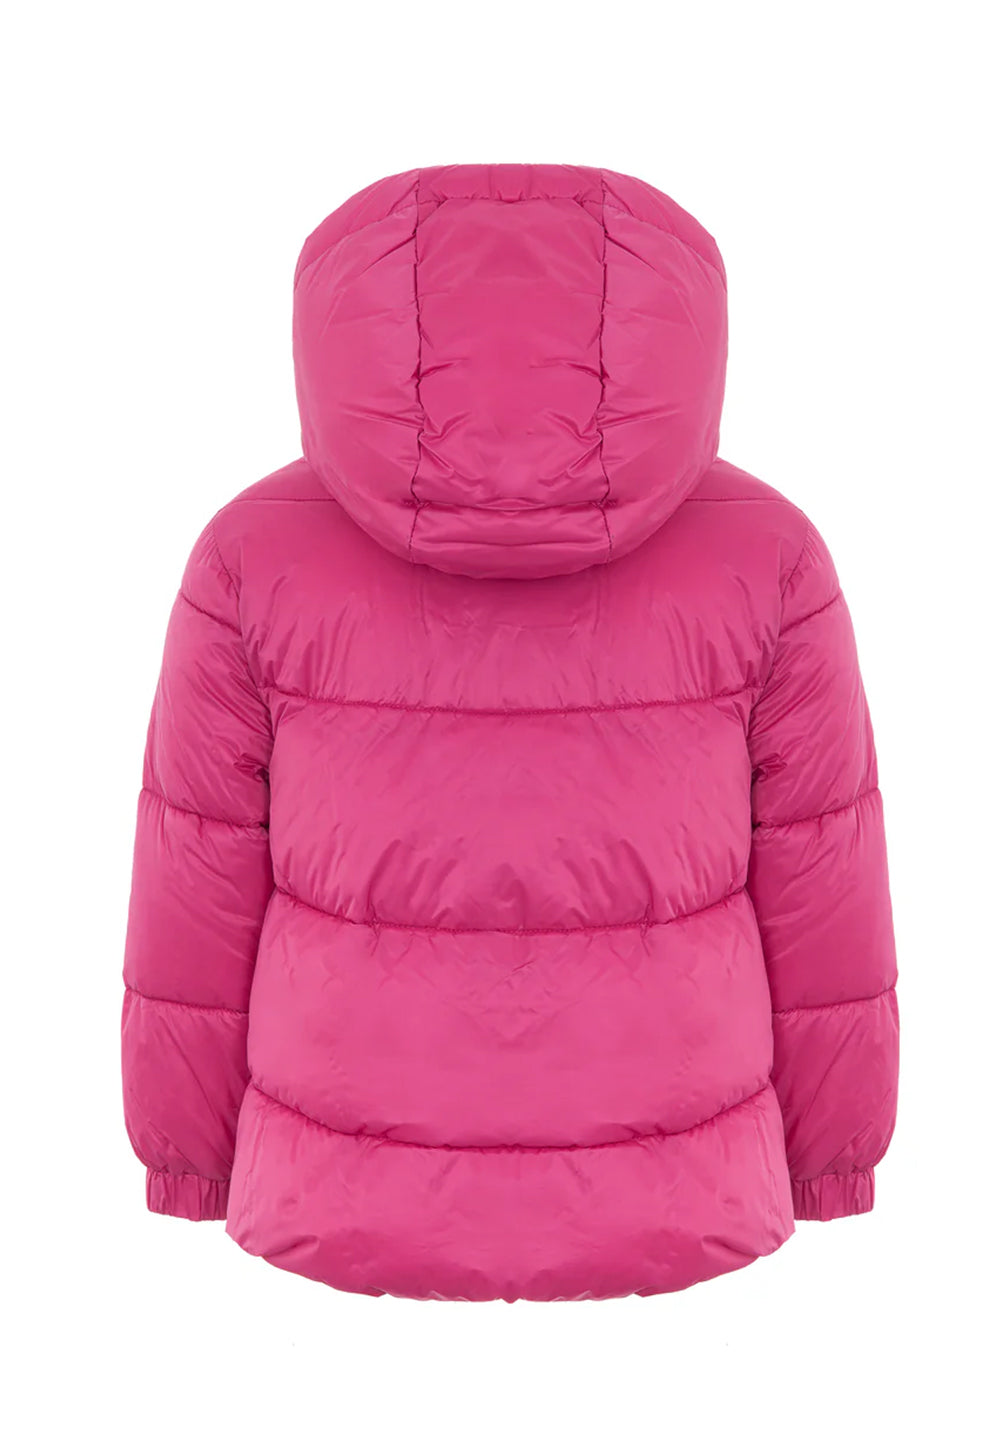 Fluorescent pink jacket for girls